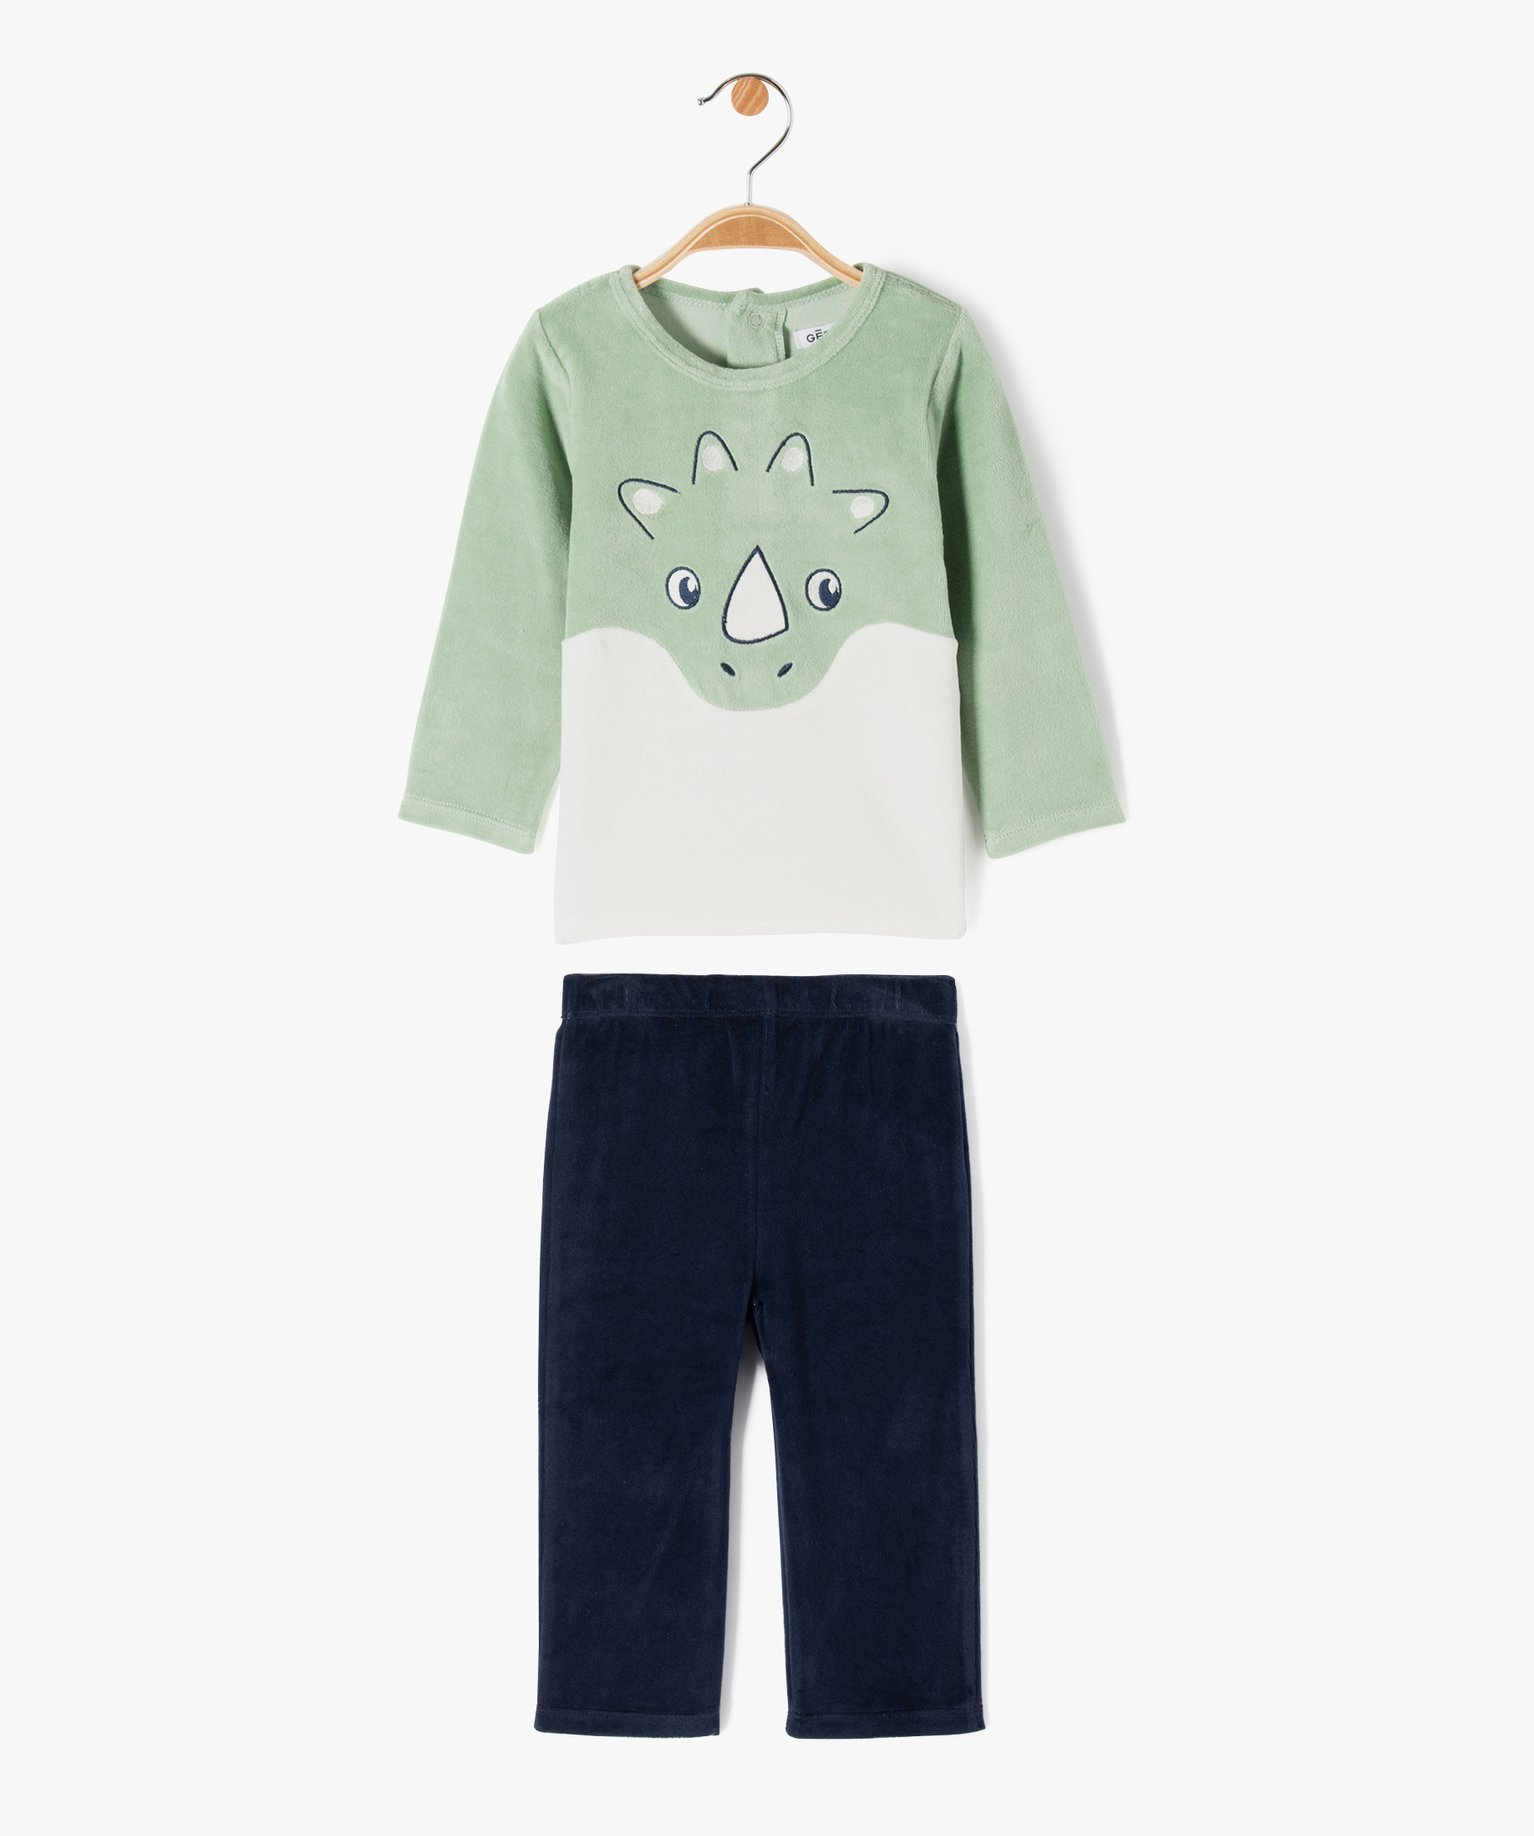 Pyjama 2 pièces en velours avec motif animal bébé garçon - 12M - vert - GEMO